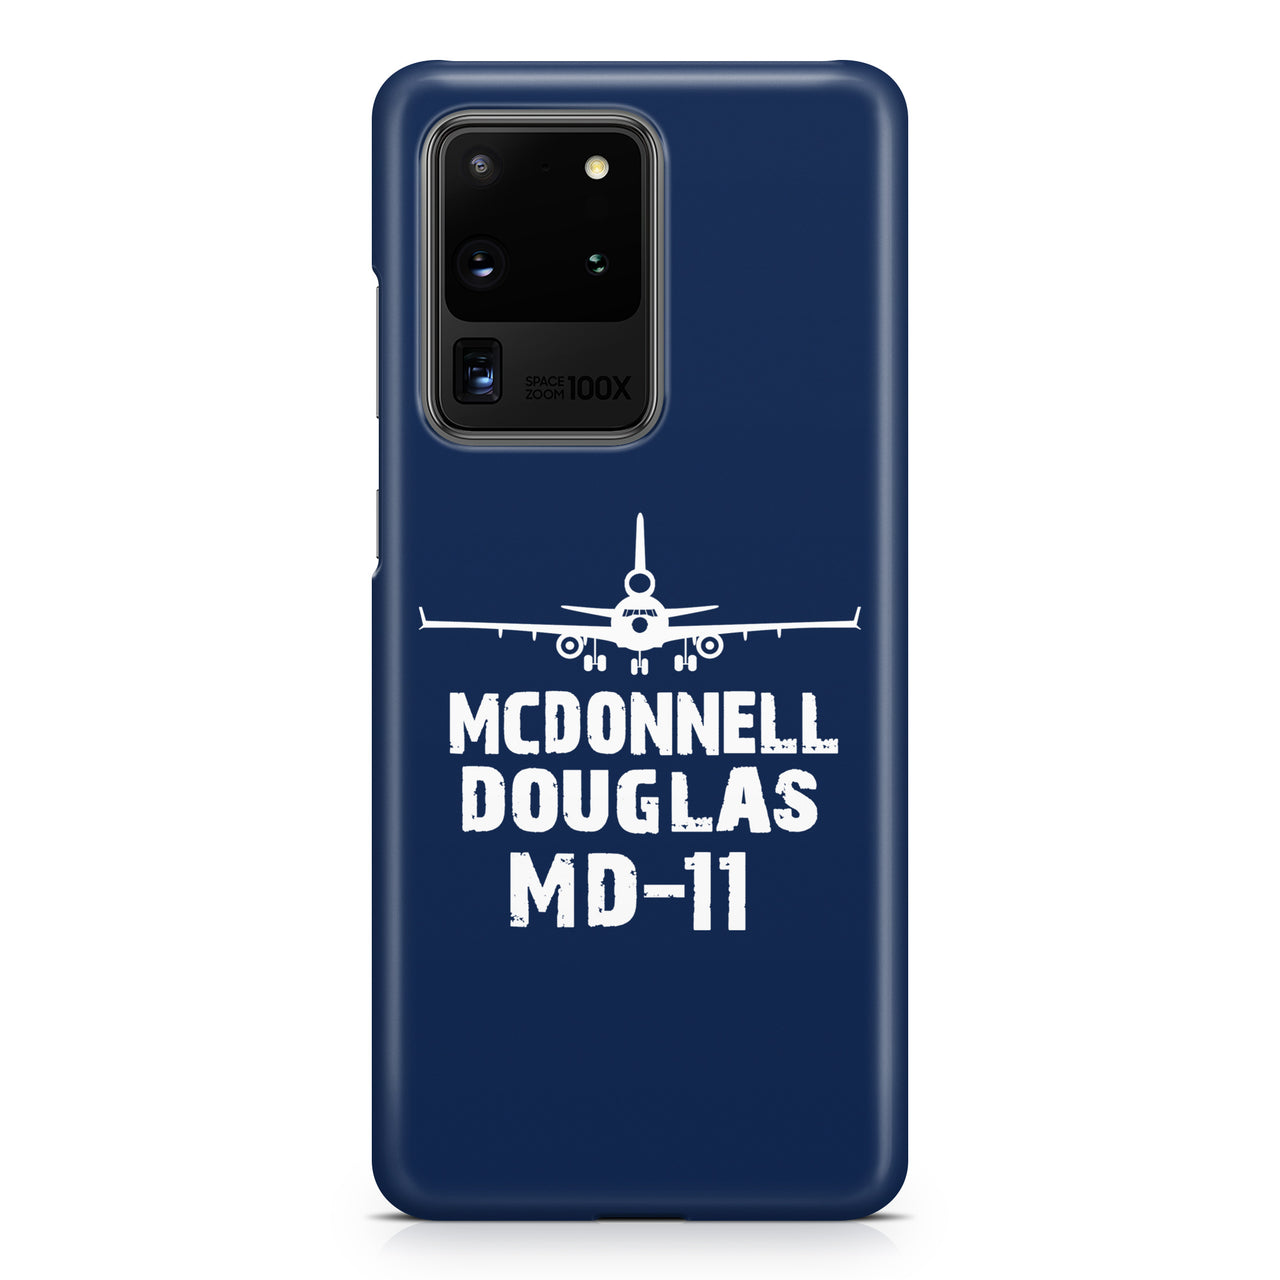 McDonnell Douglas MD-11 & Plane Samsung A Cases